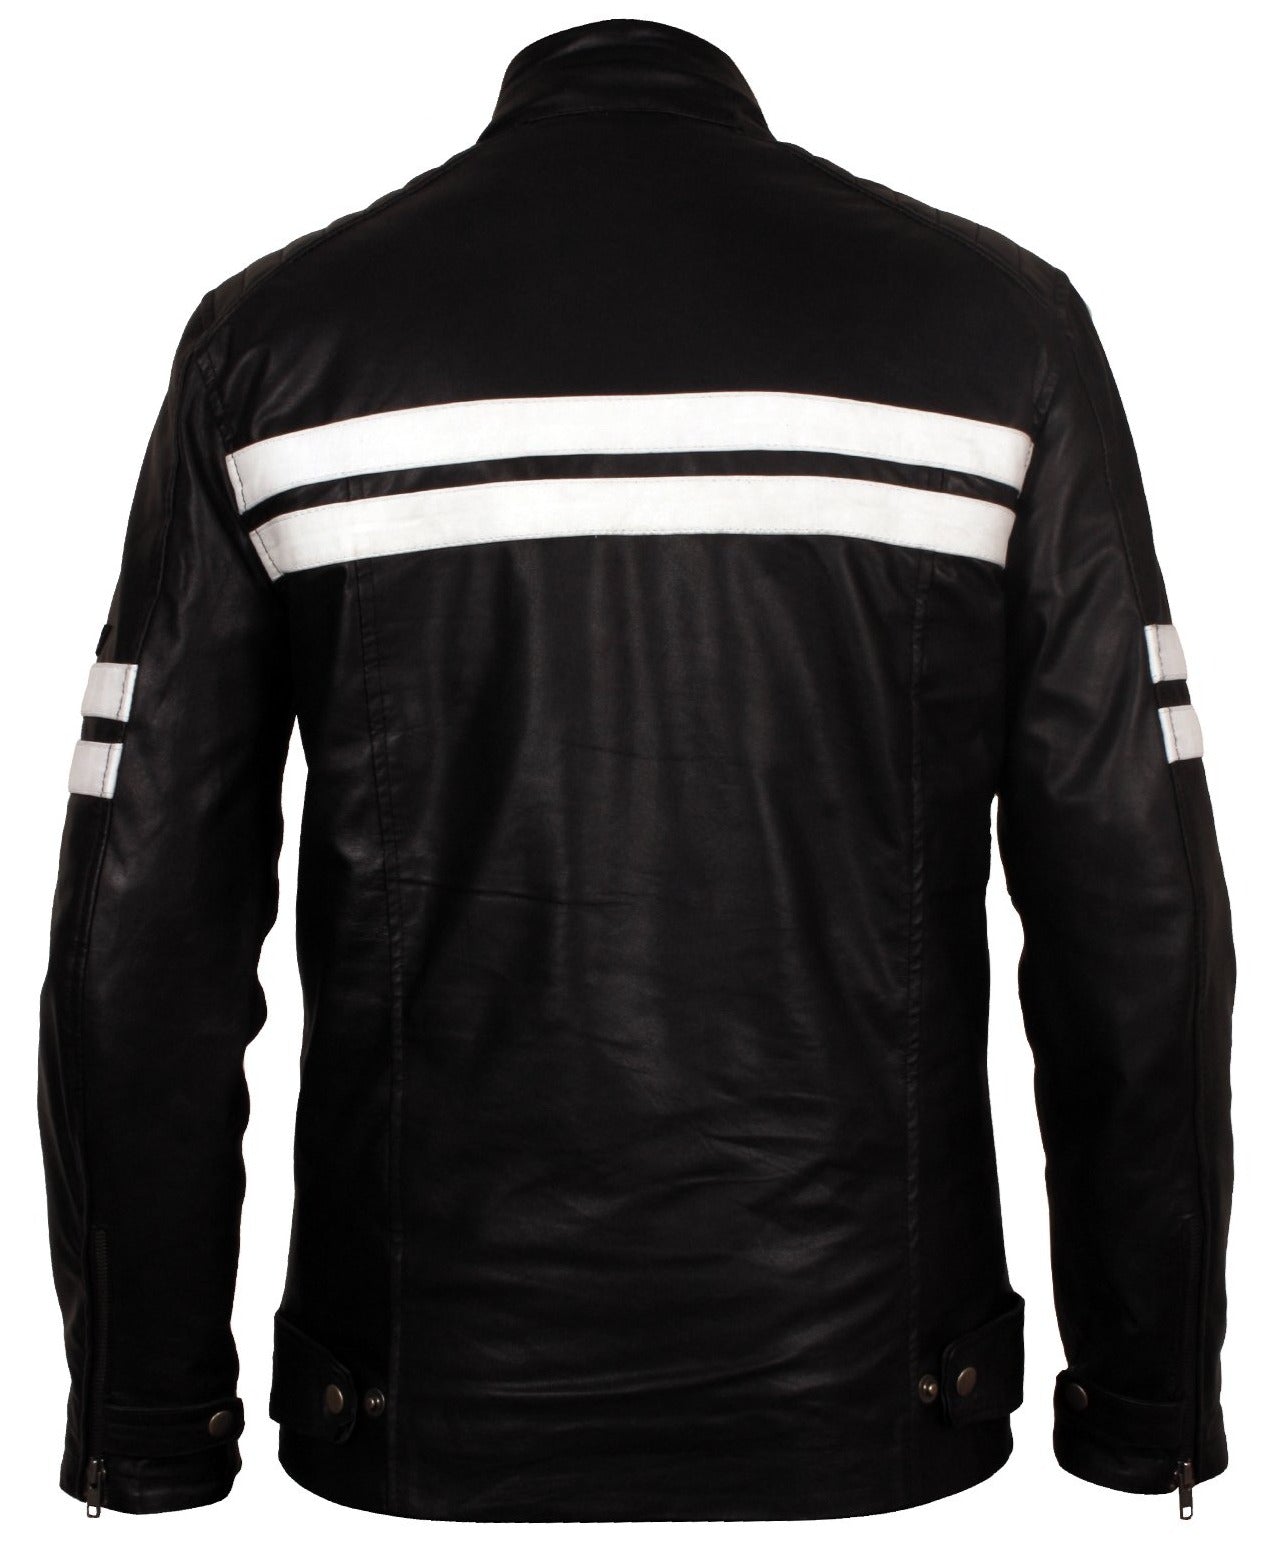 Black Leather Jacket With White Stripes